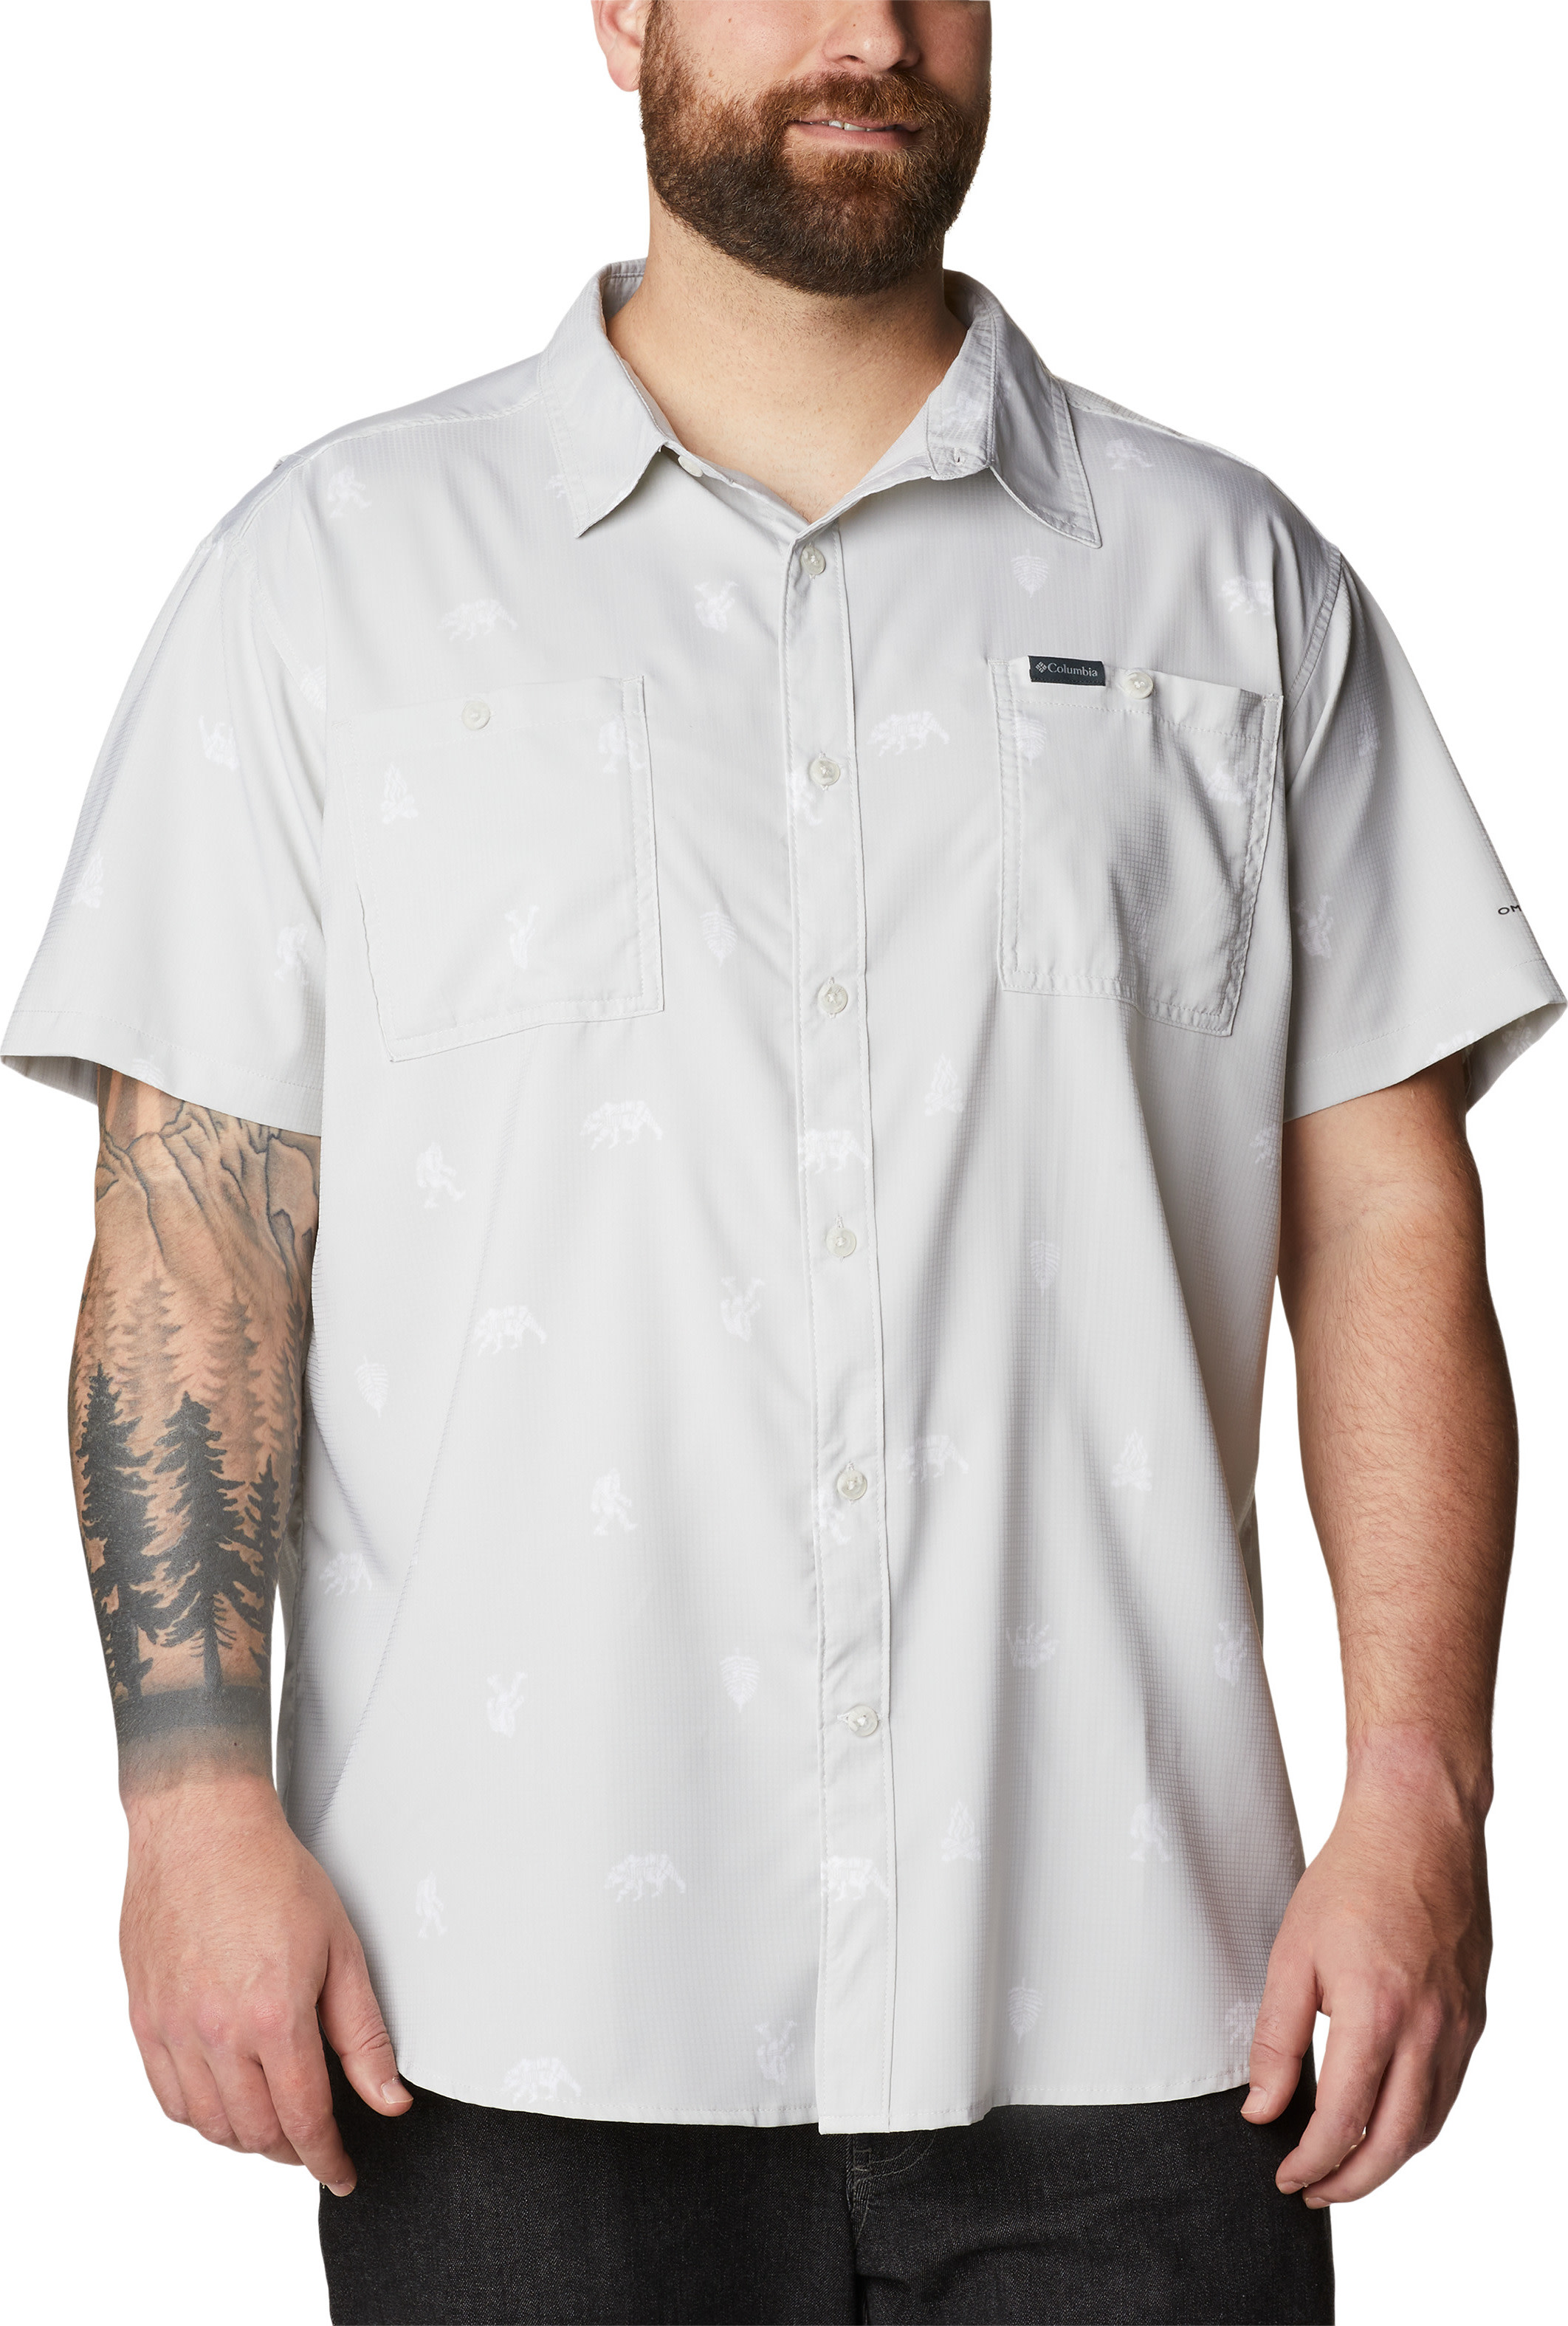 Men’s Utilizer Printed Woven Shortsleeve Shirt Nimbus Grey Camp Social